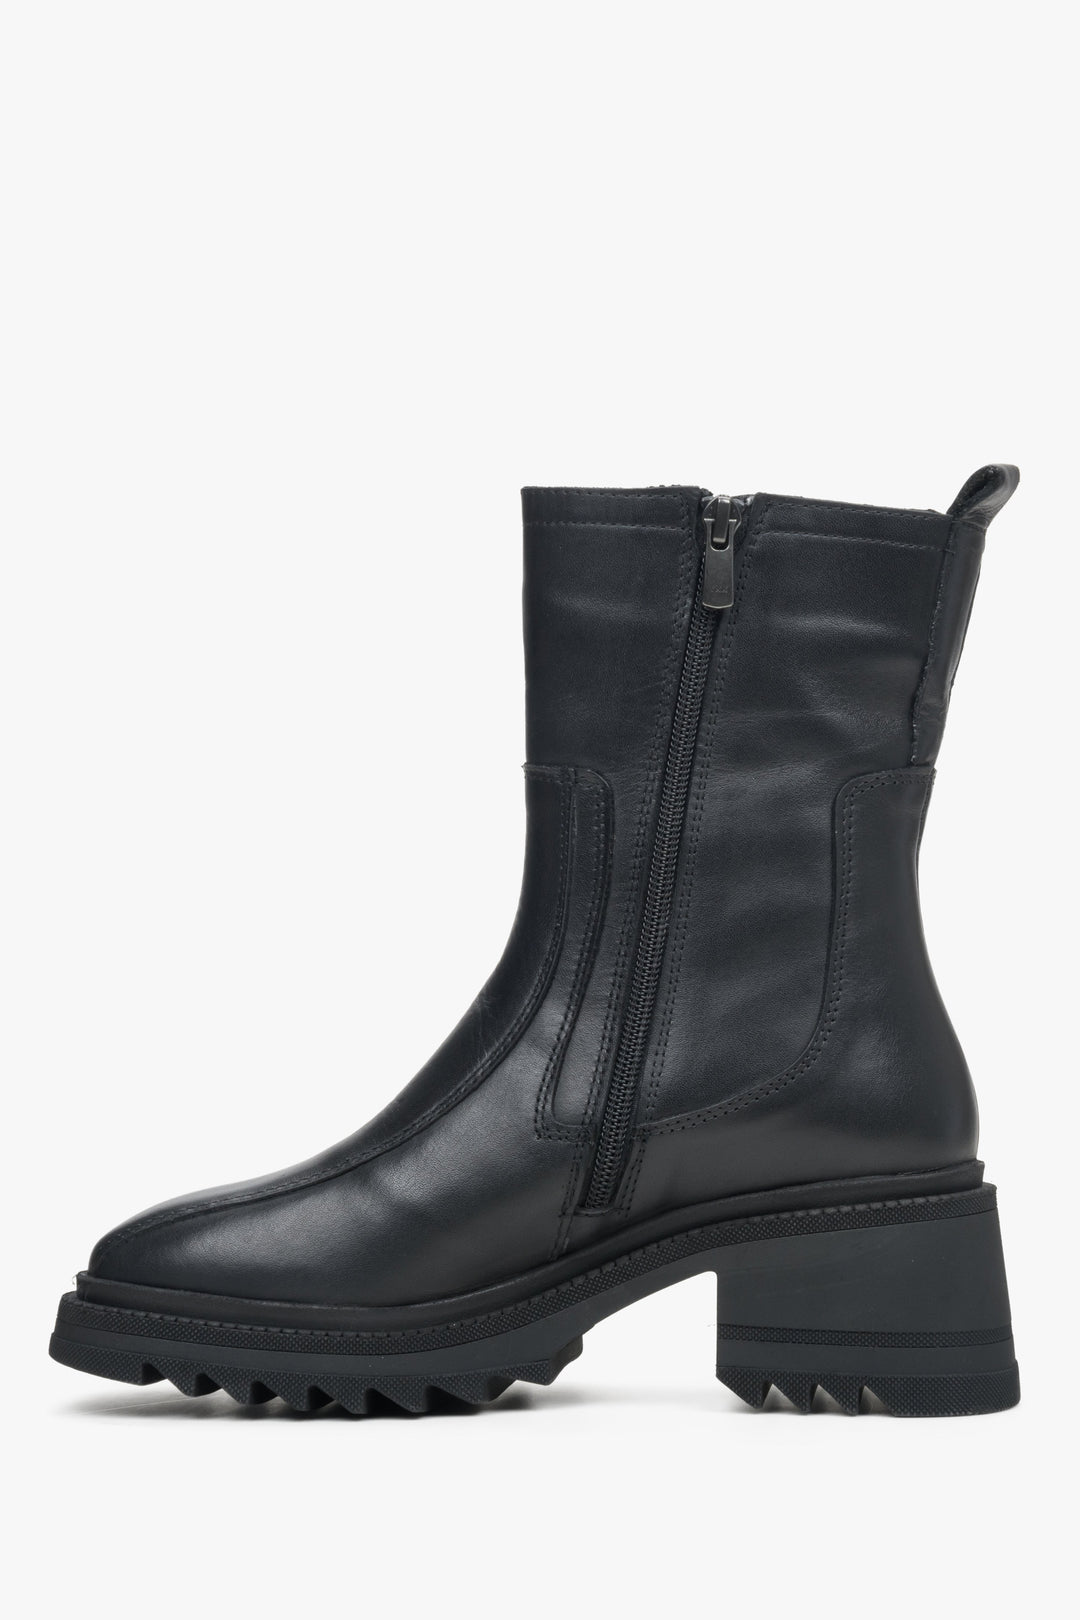 Women's black boots in genuine leather by Estro - shoe profile.